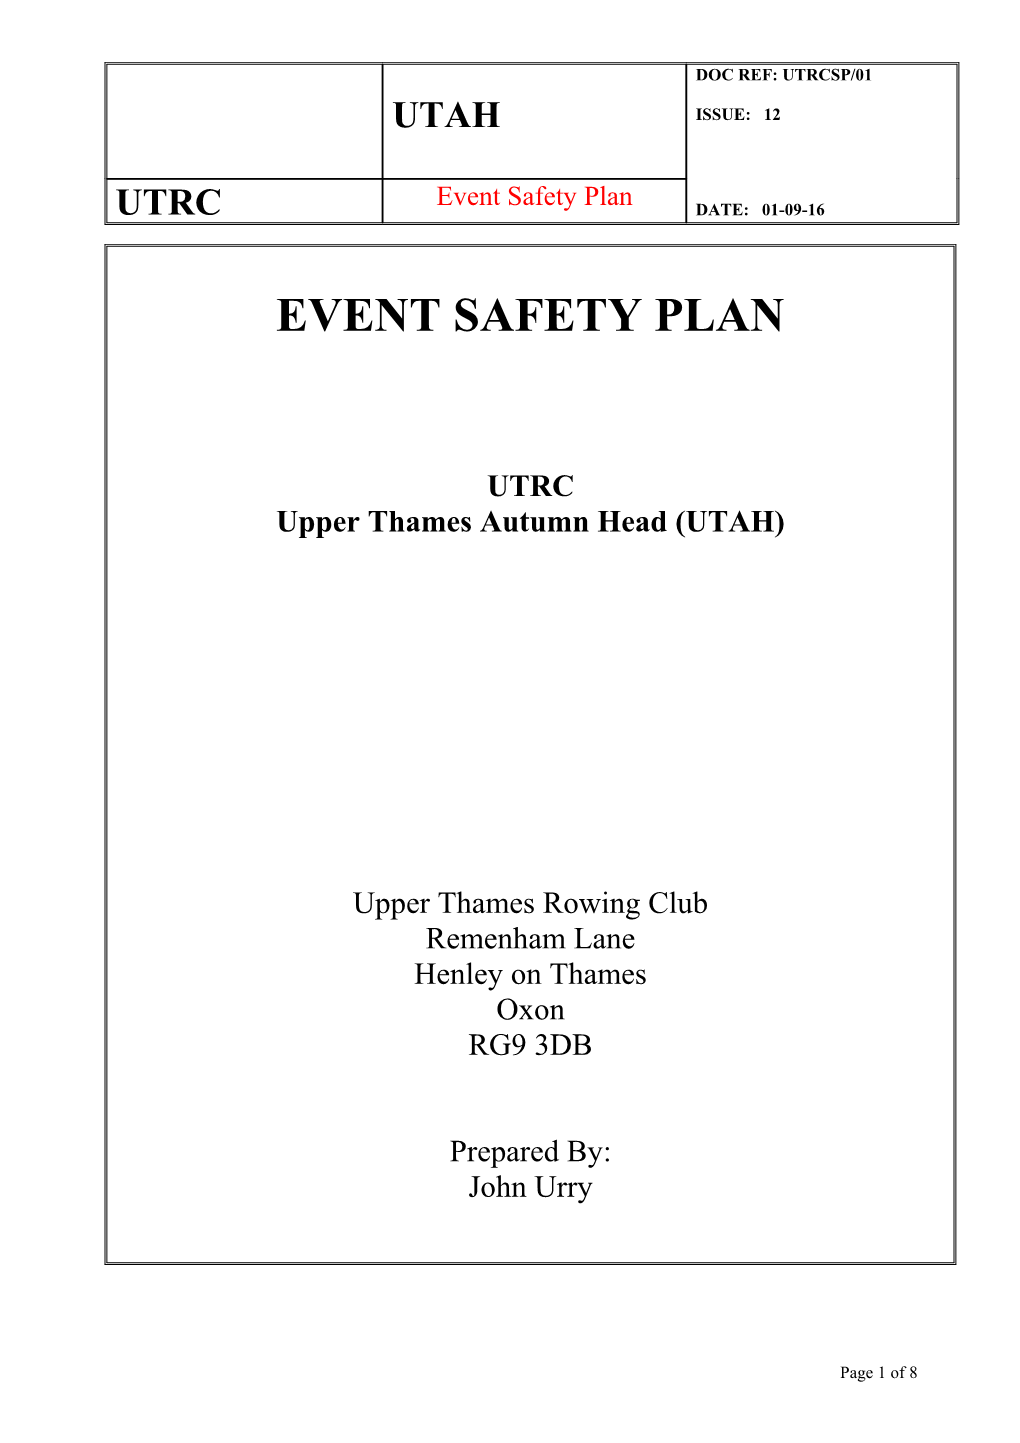 C. Safety Plan Amendments